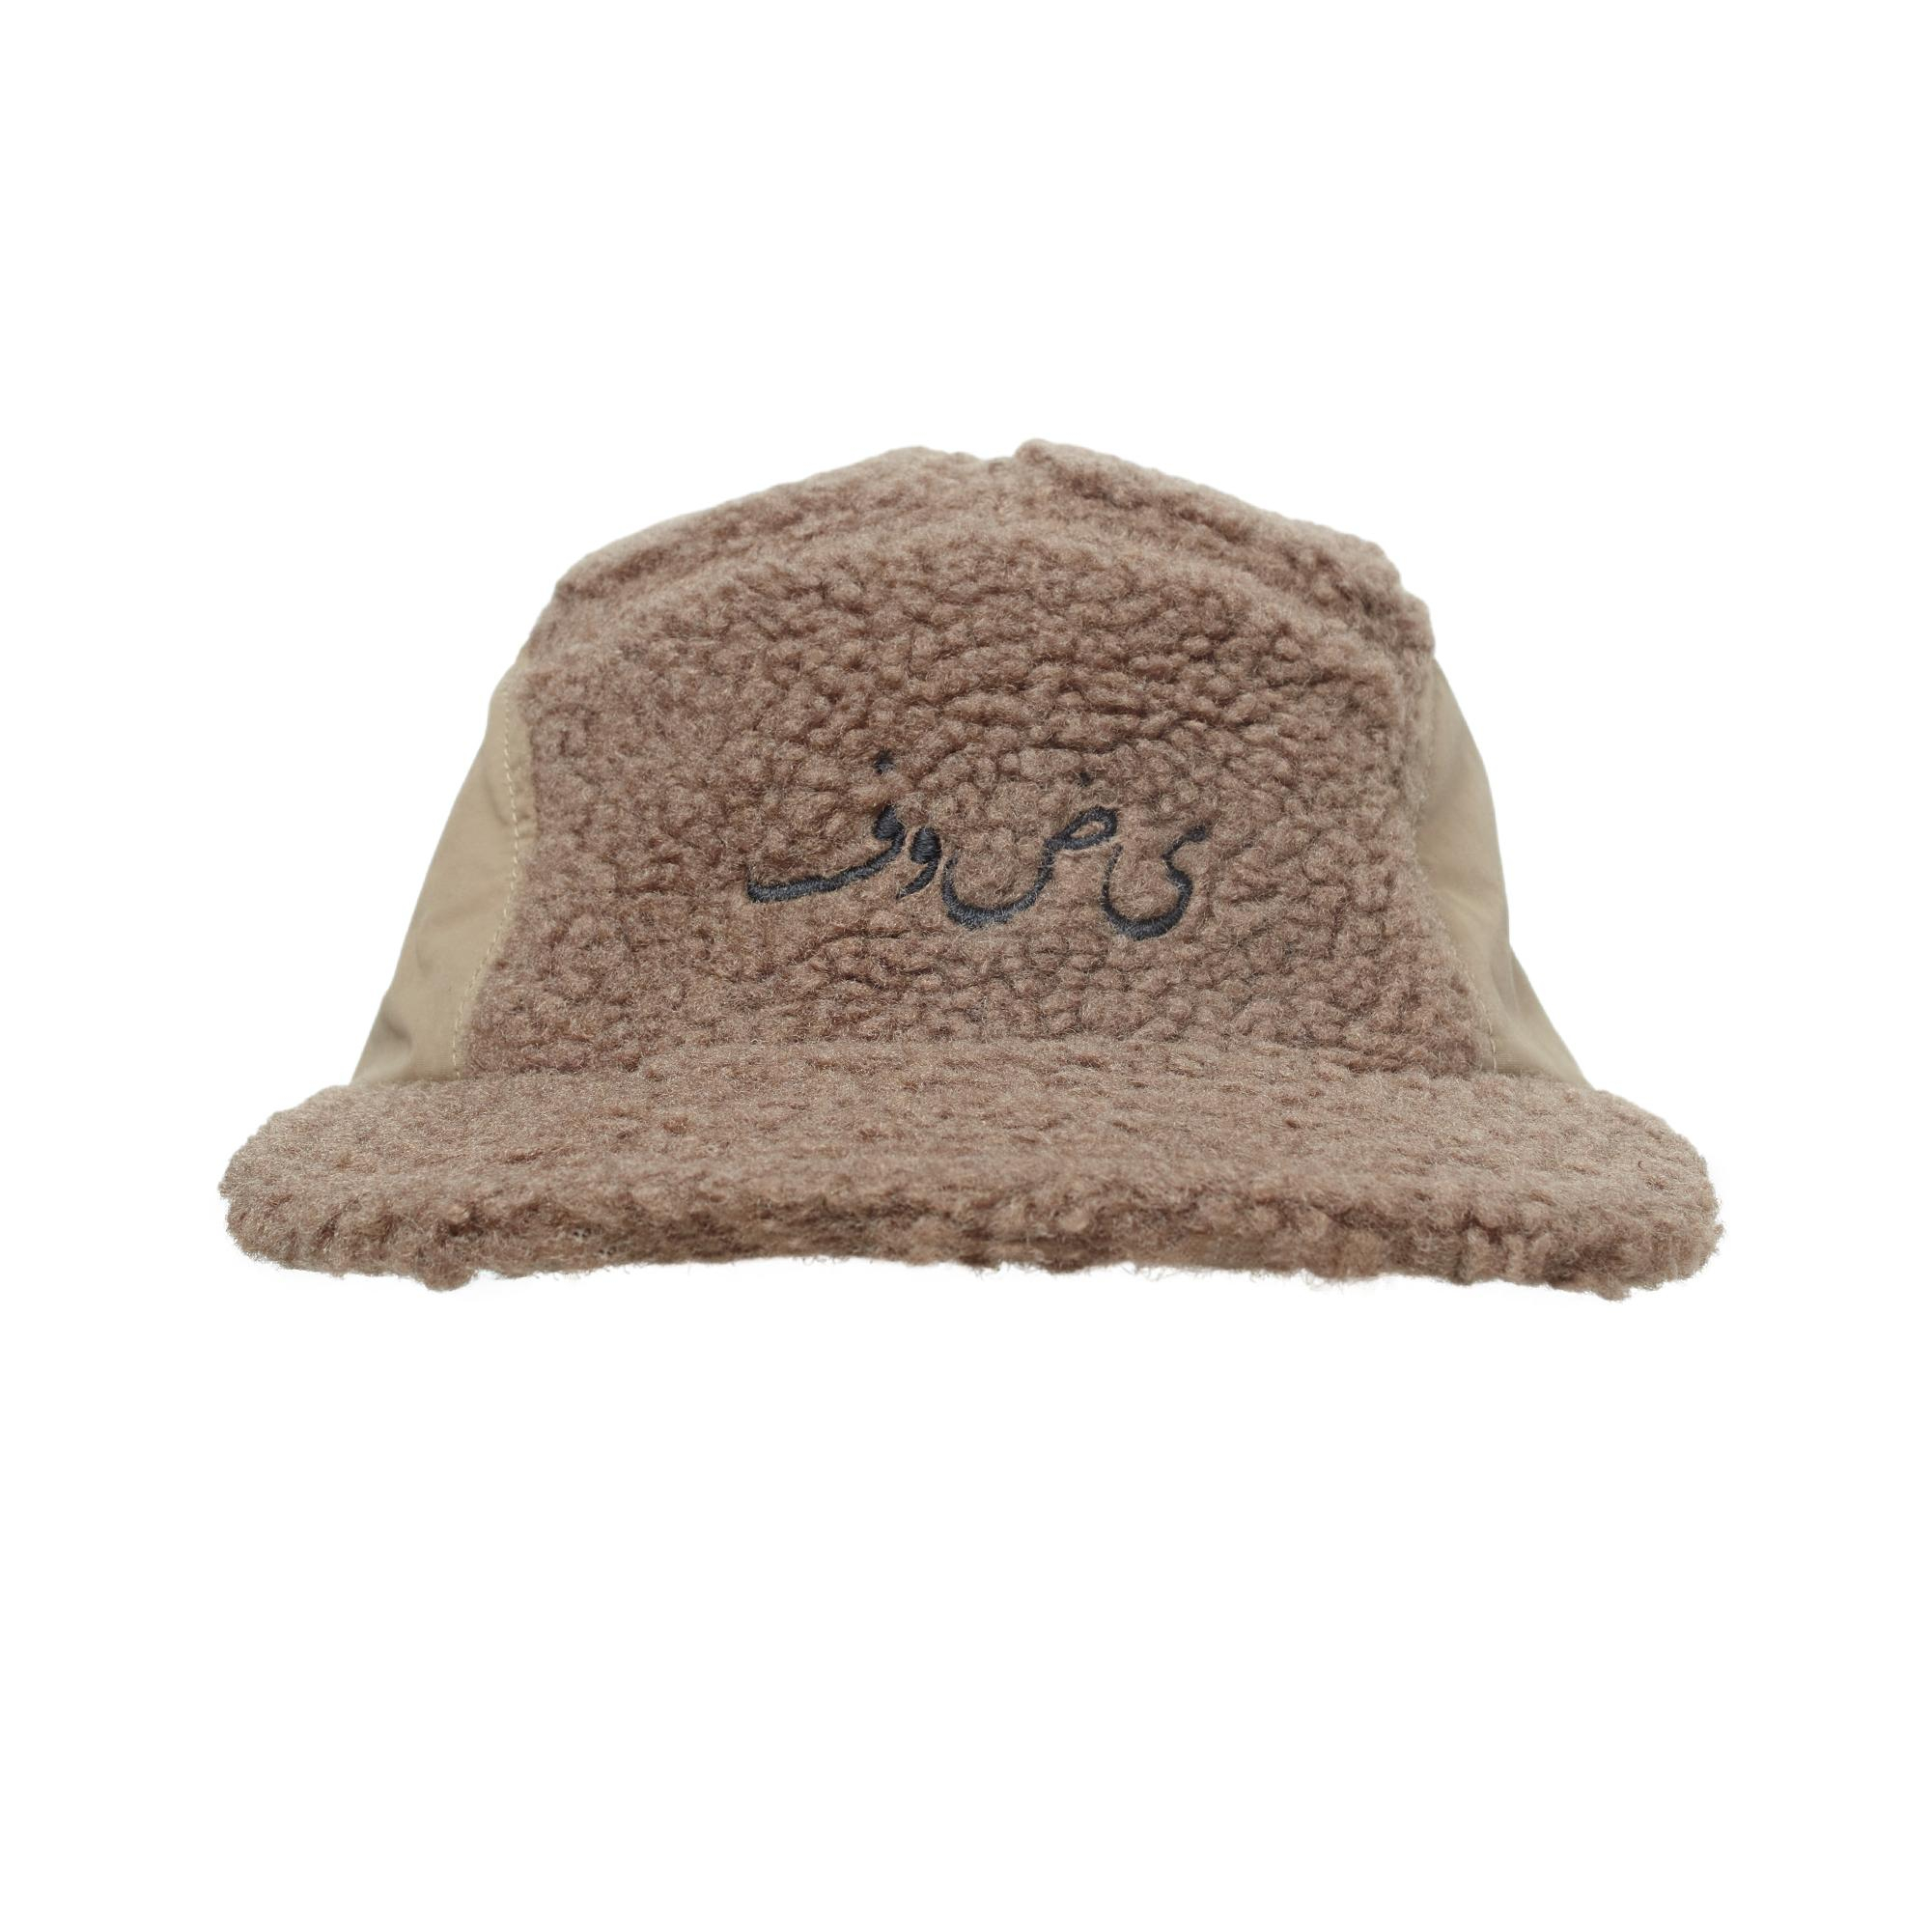 Комбинированная кепка с вышивкой Undercover UP2C4H01/BEIGE, размер One Size UP2C4H01/BEIGE - фото 2